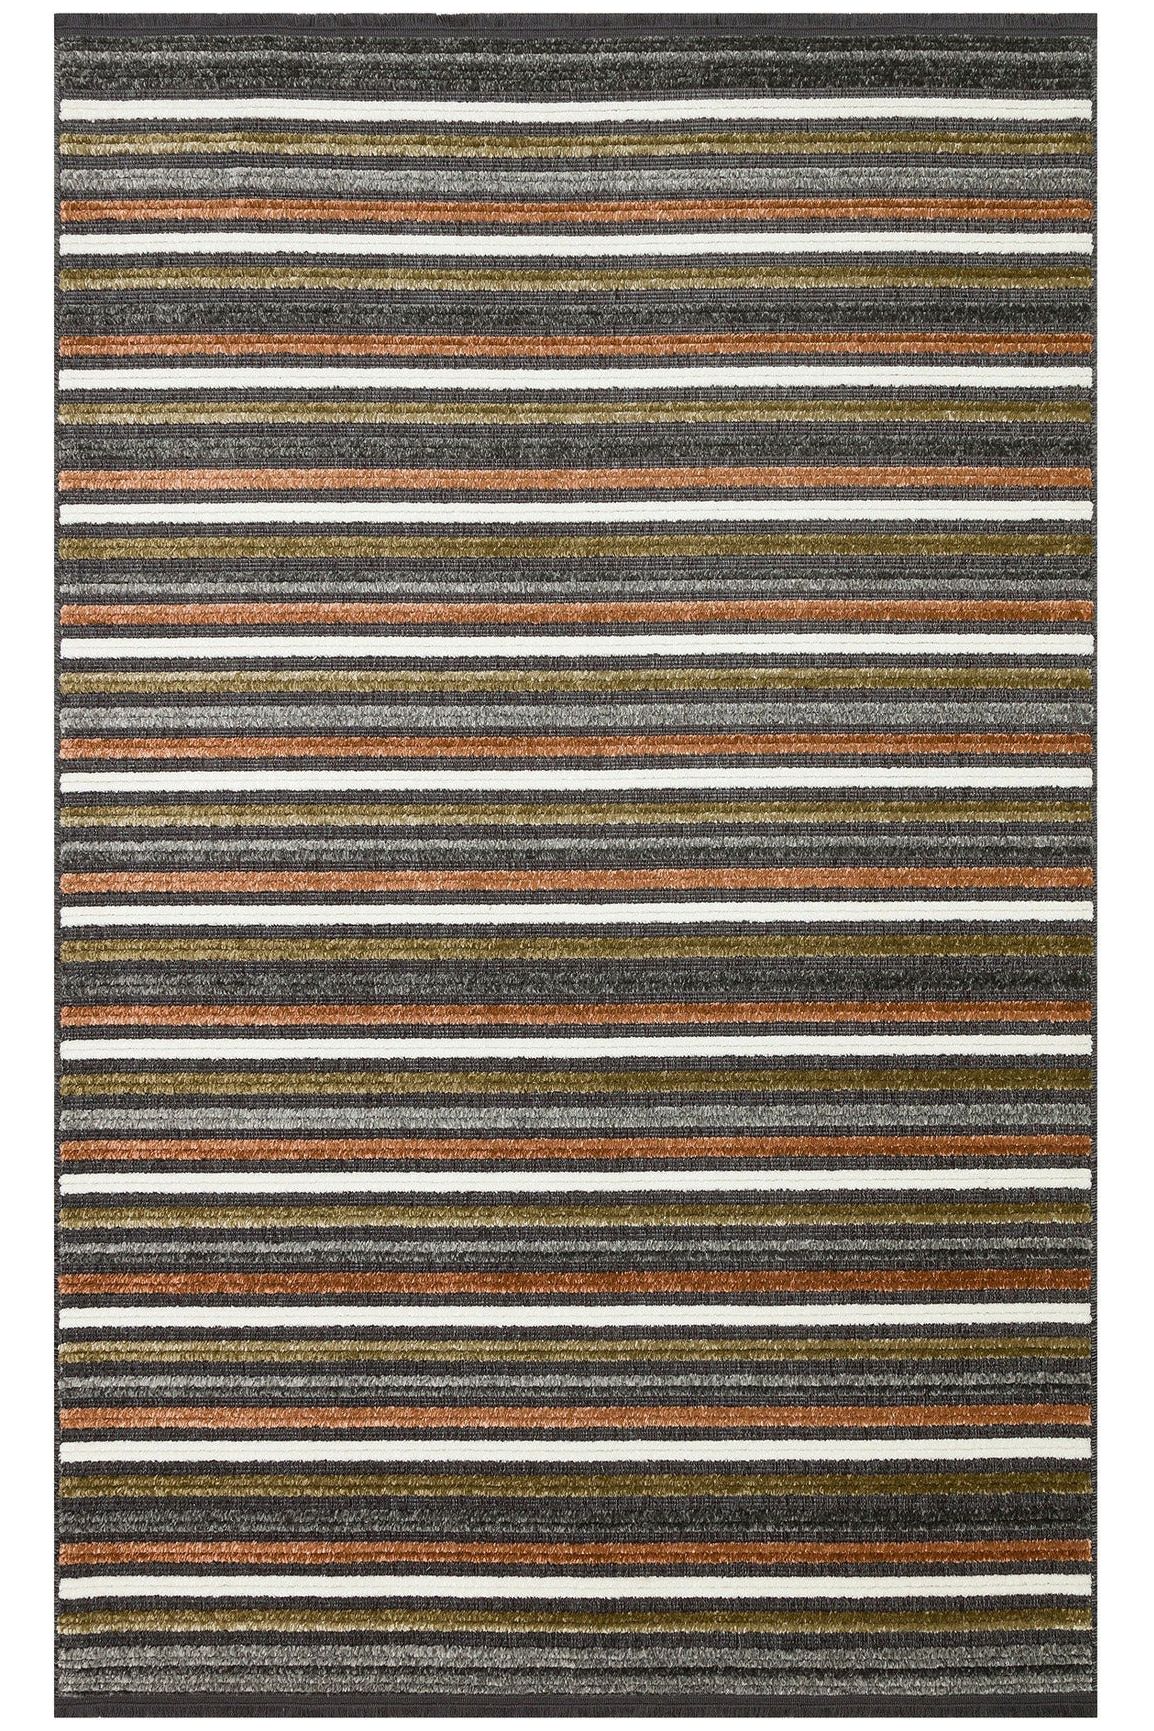 #Turkish_Carpets_Rugs# #Modern_Carpets# #Abrash_Carpets#Jkr 01 Multy